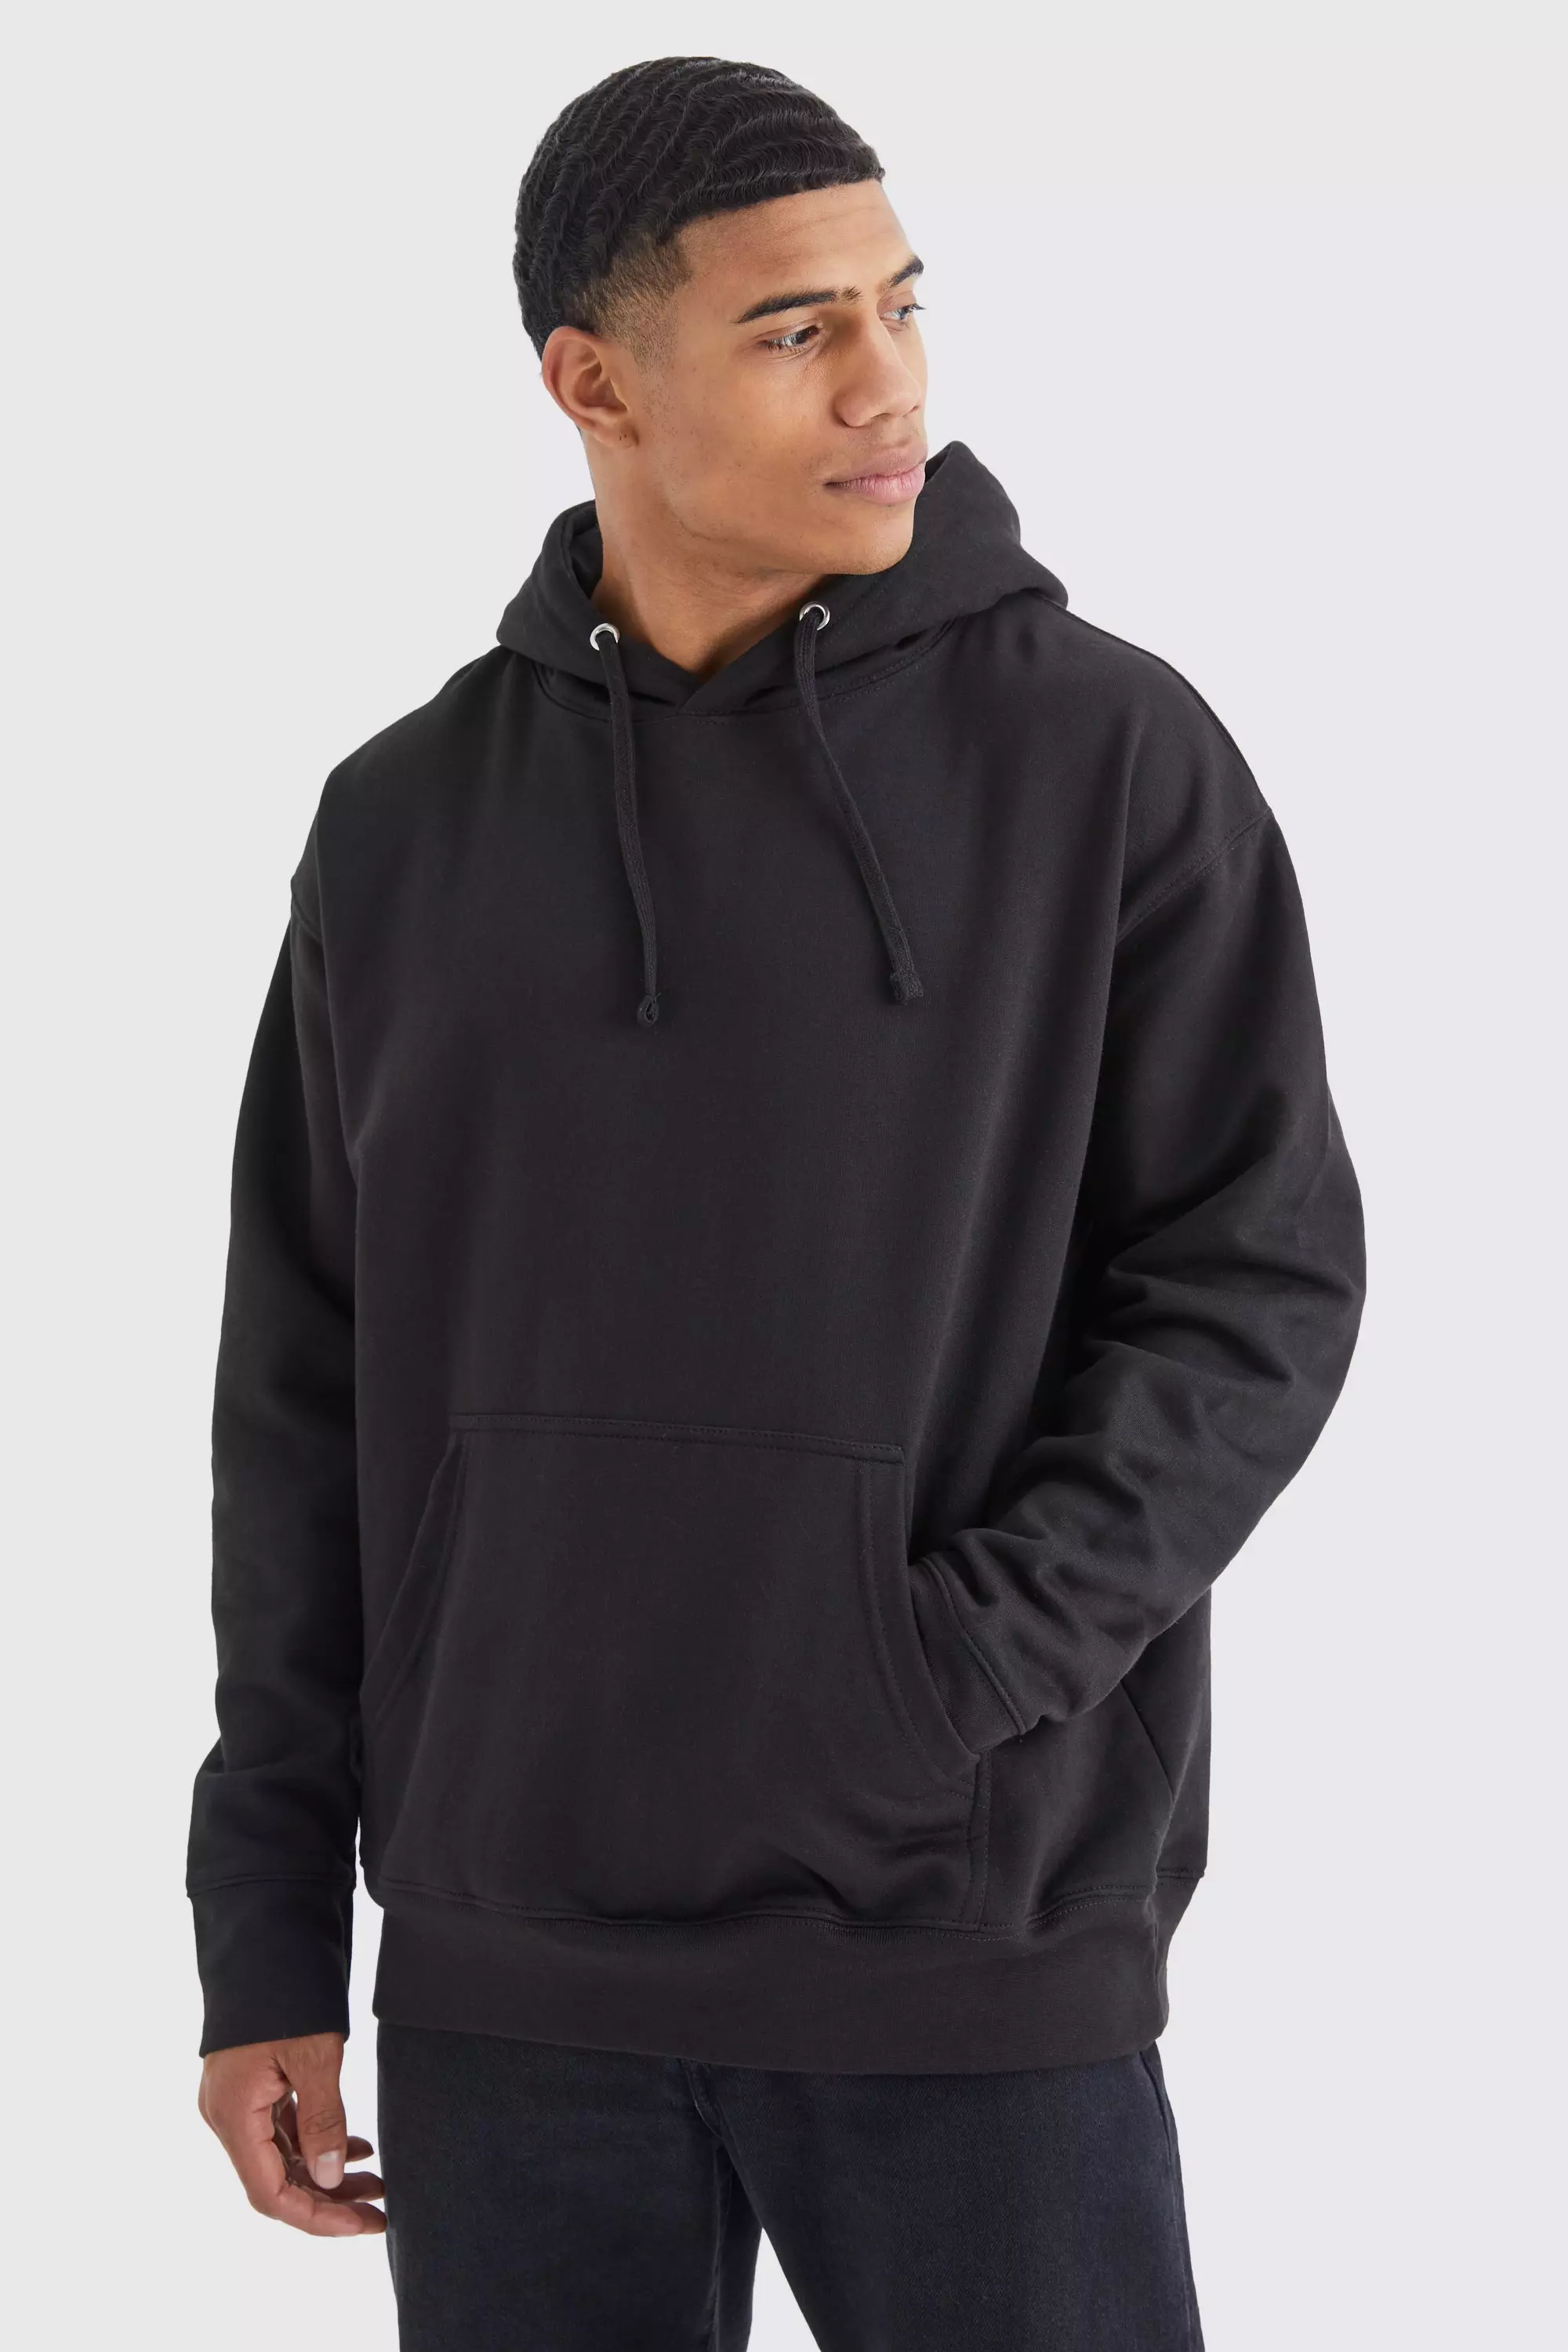 ASOS DESIGN unisex license oversized sweatshirt with Tupac prints in black